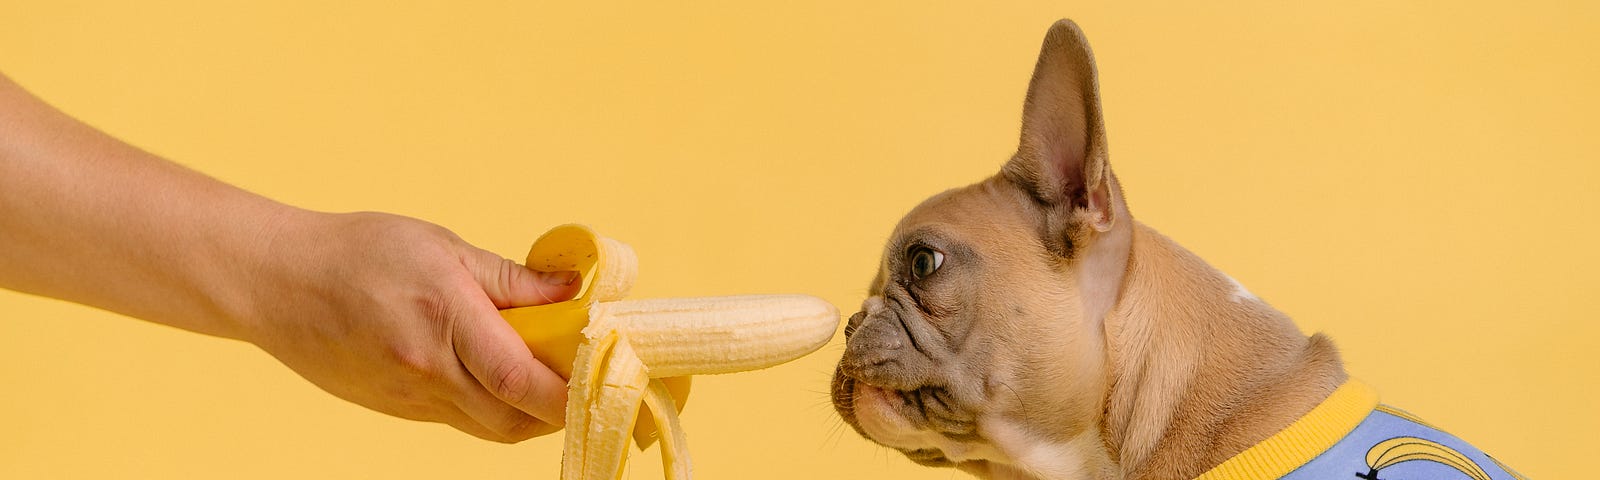 A cute dog in a banana shirt sniffing a banana.